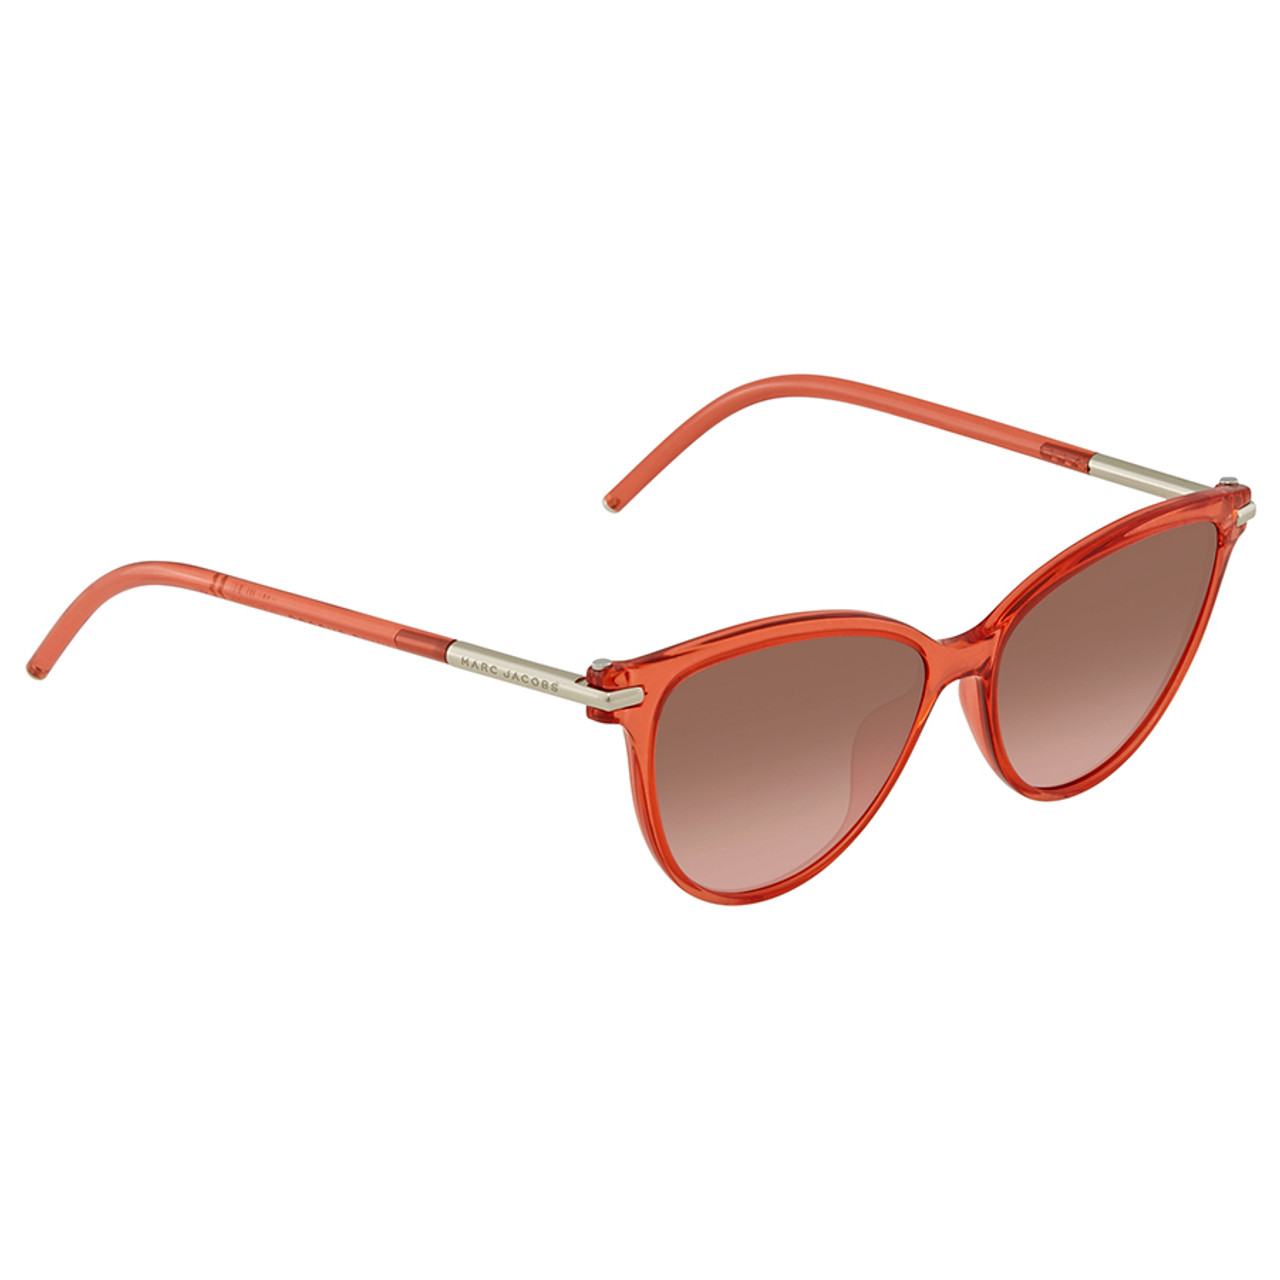 Marc Jacobs Designer Sunglasses Red Coral/Brown Gradient - Speert International